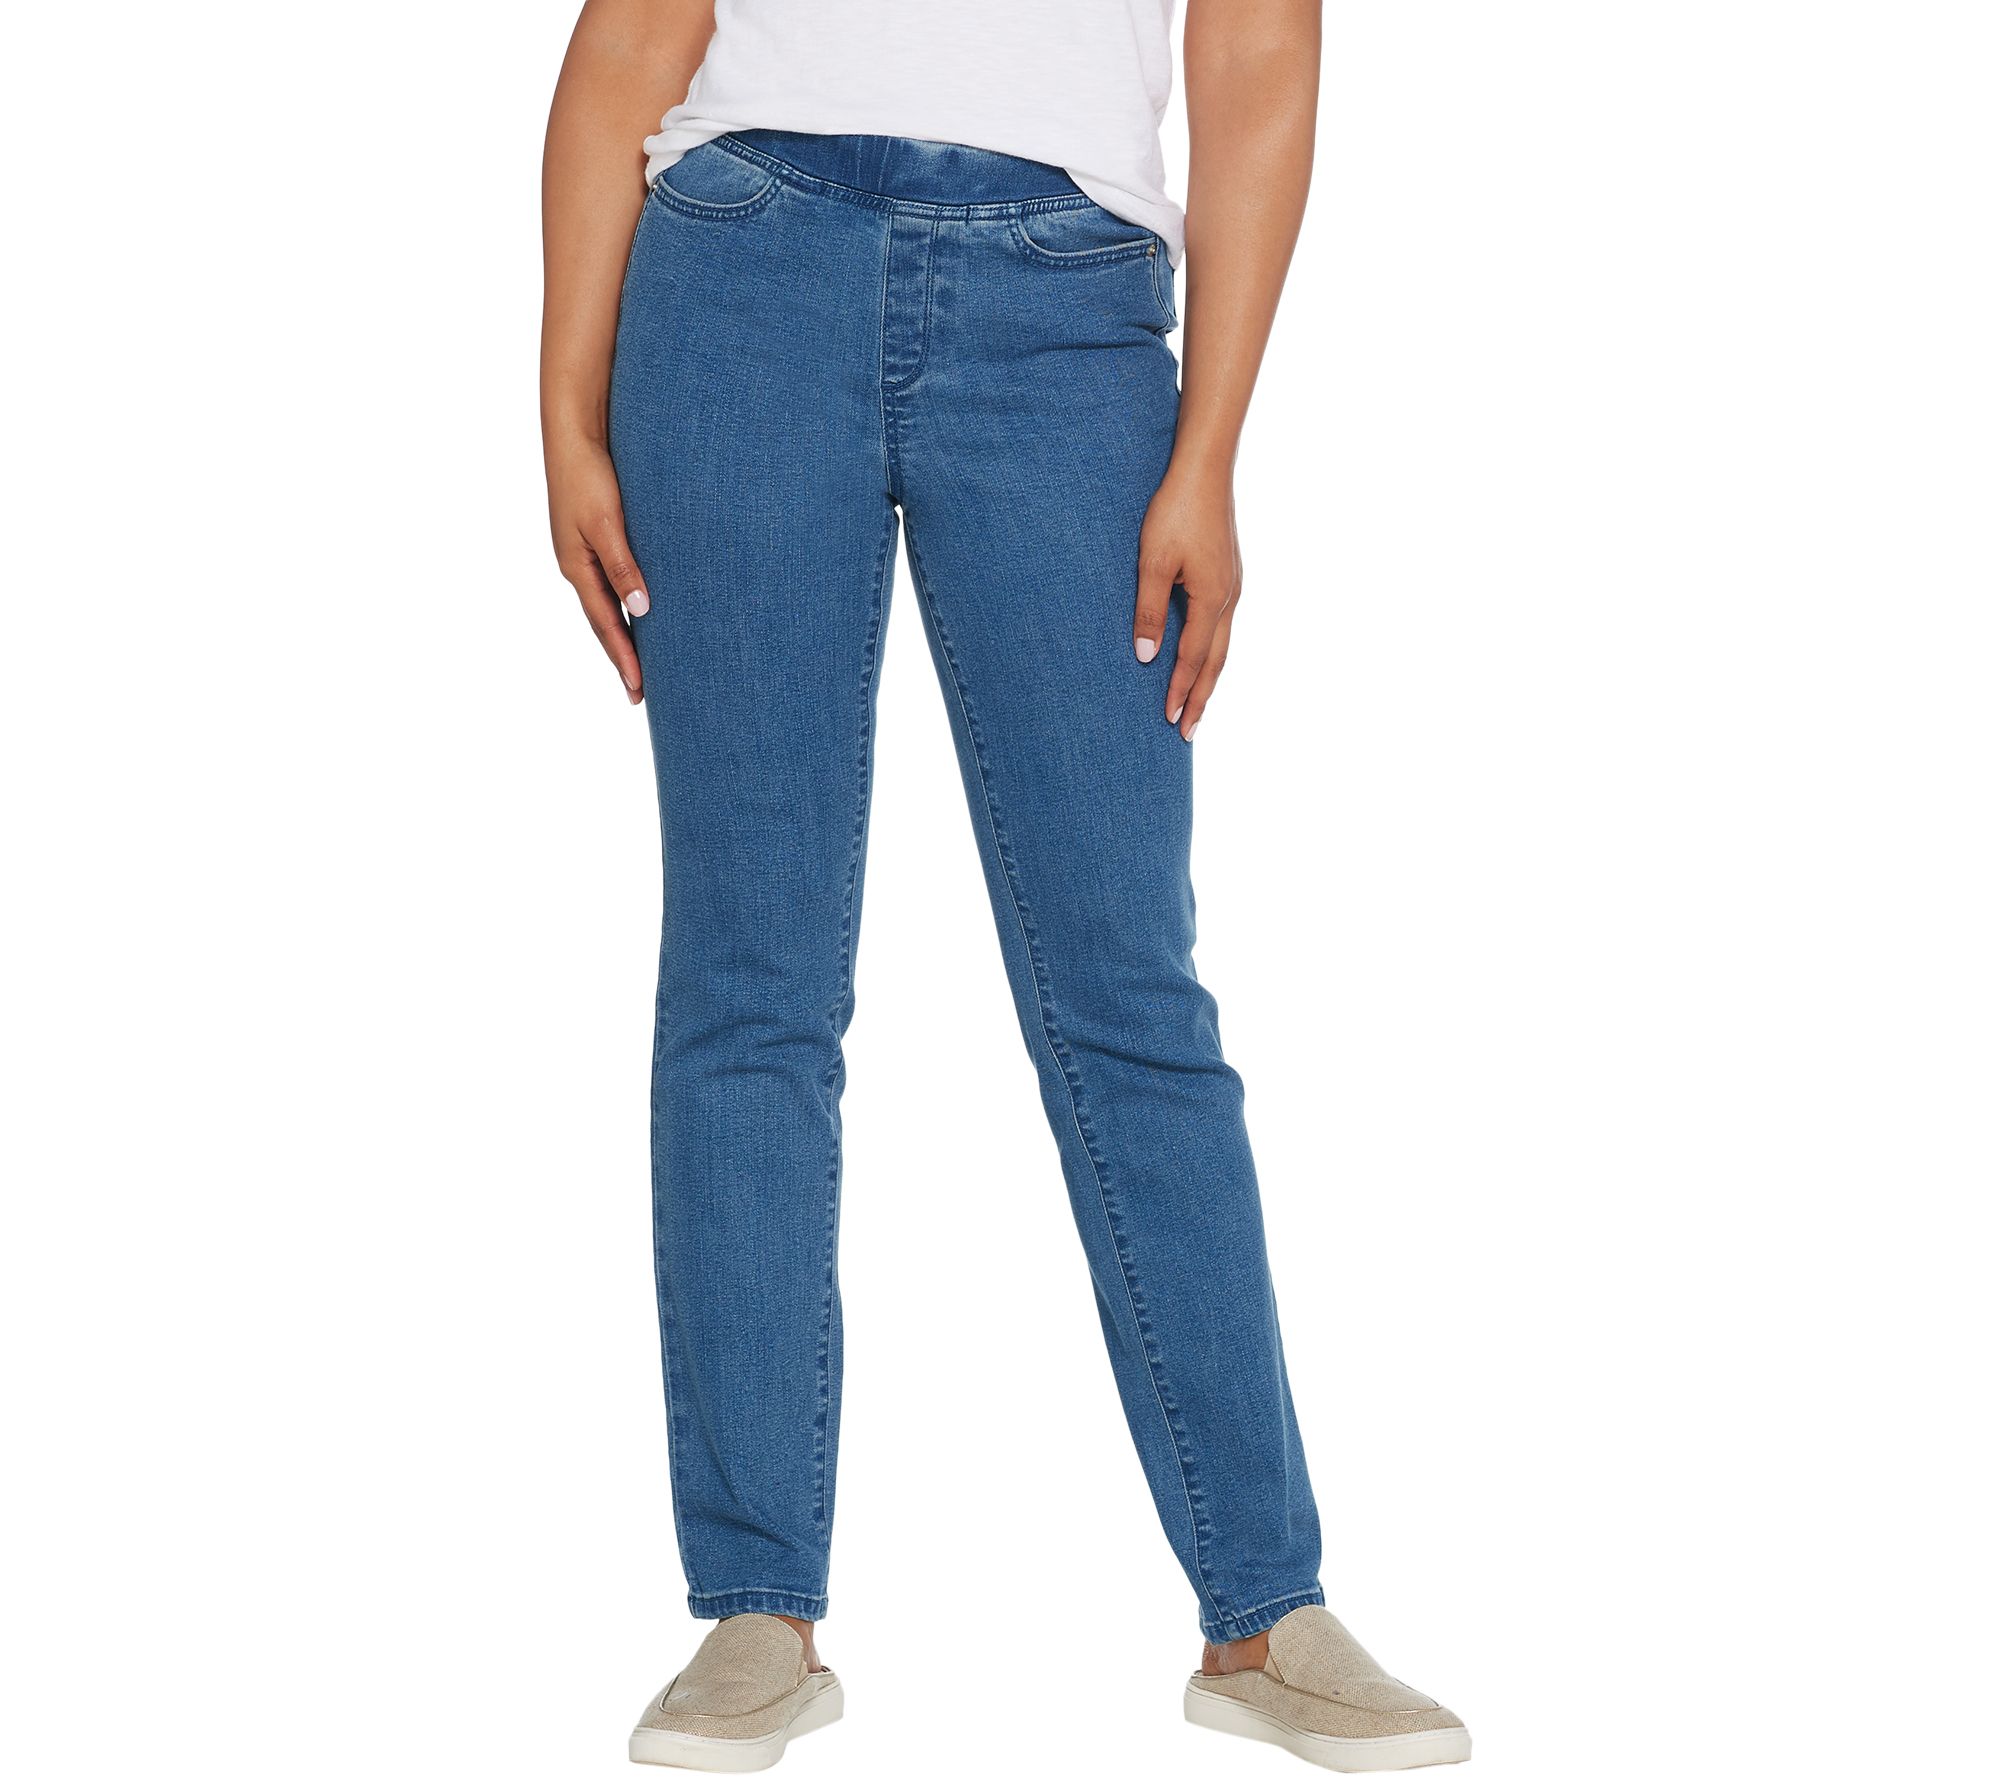 qvc denim and company jeans